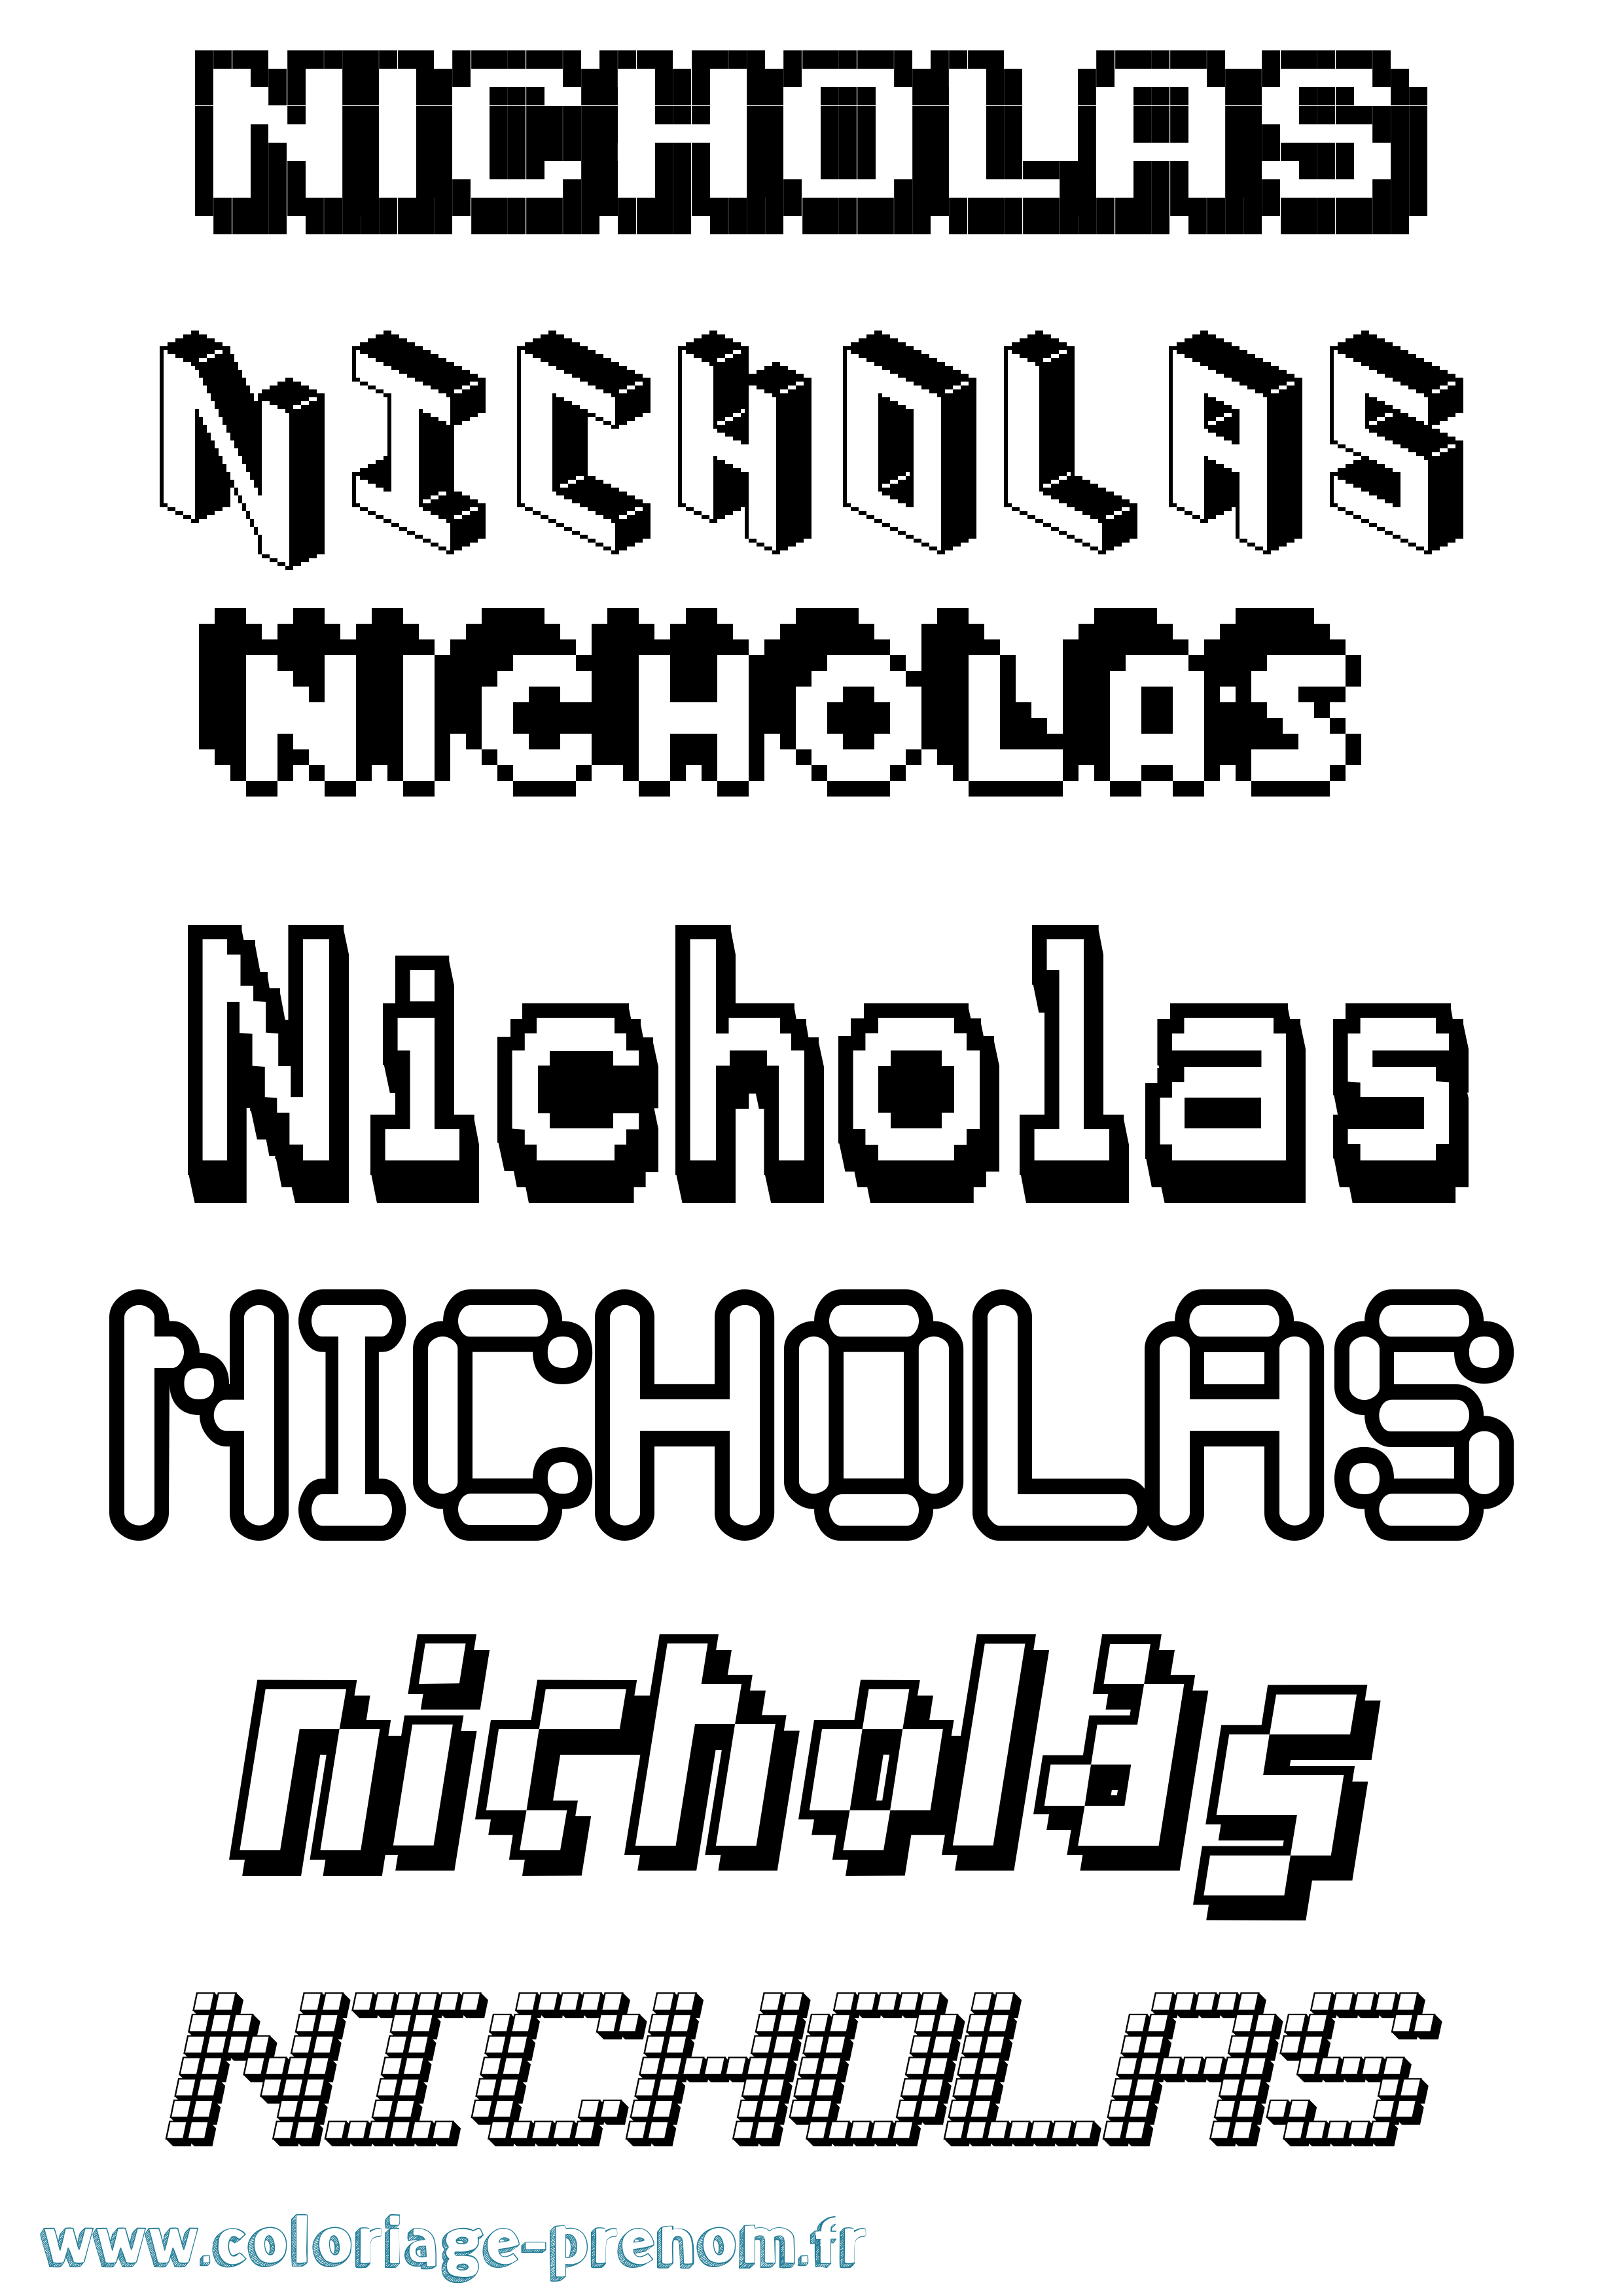 Coloriage prénom Nicholas Pixel